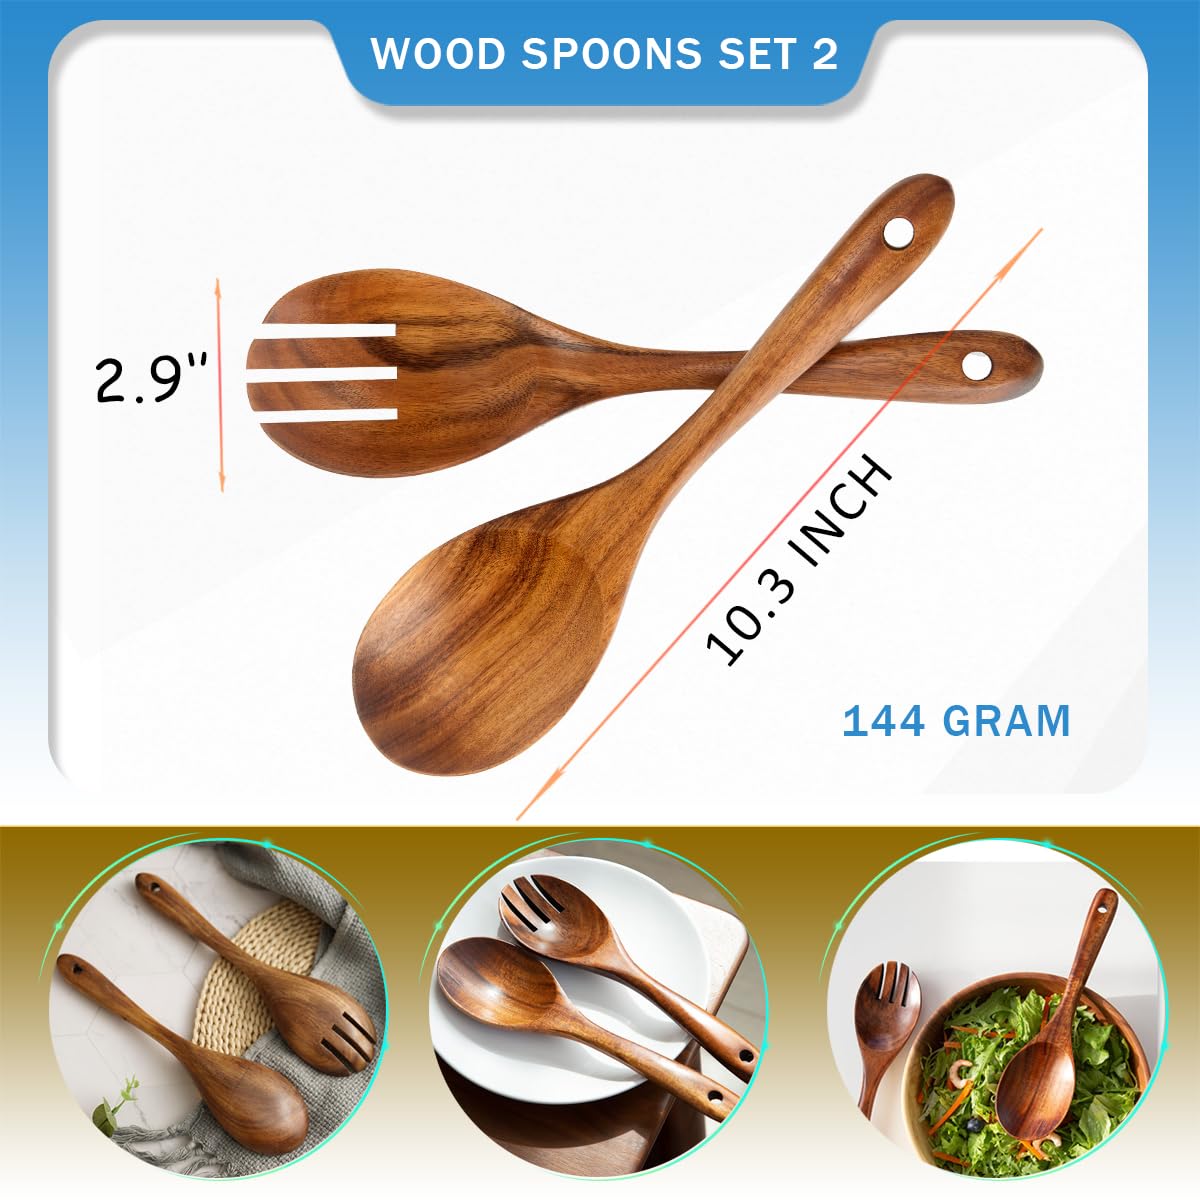 Teak Wooden Salad Fork and Spoon, Wooden Salad Spoons 10.2 Inches, Teak Wood Spoon Fork, Natural Wooden Spoon Fork Set with Ergonomic Handle, Teak Wood Salad Servers (1 Spoon + 1 Fork)